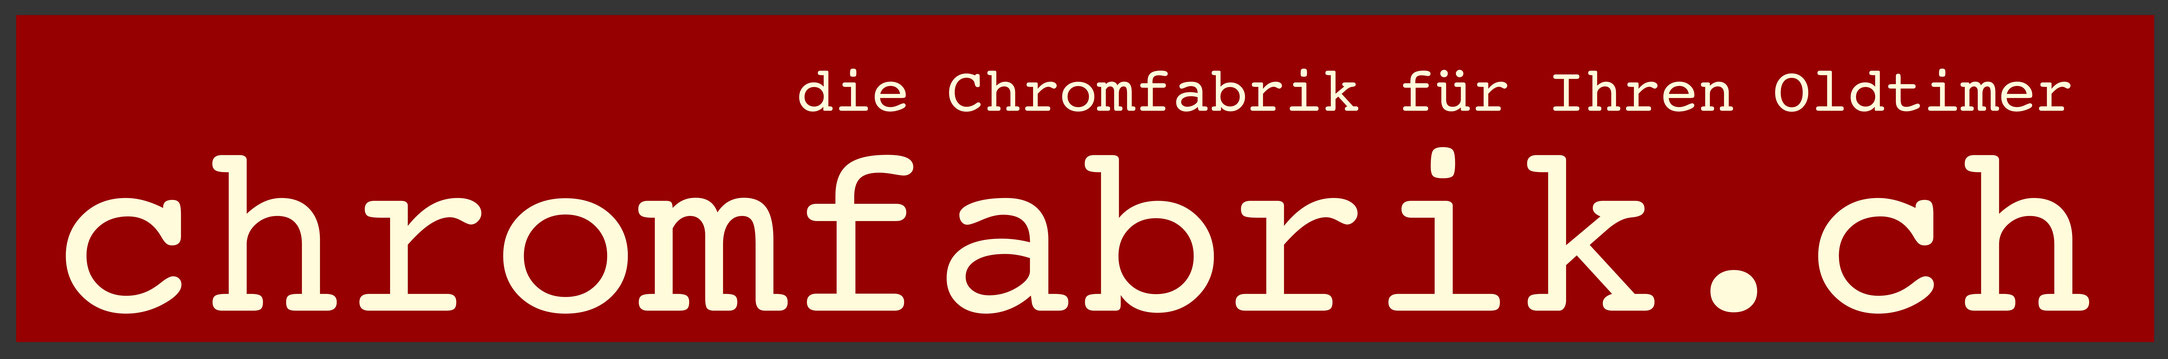 (c) Chromfabrik.ch